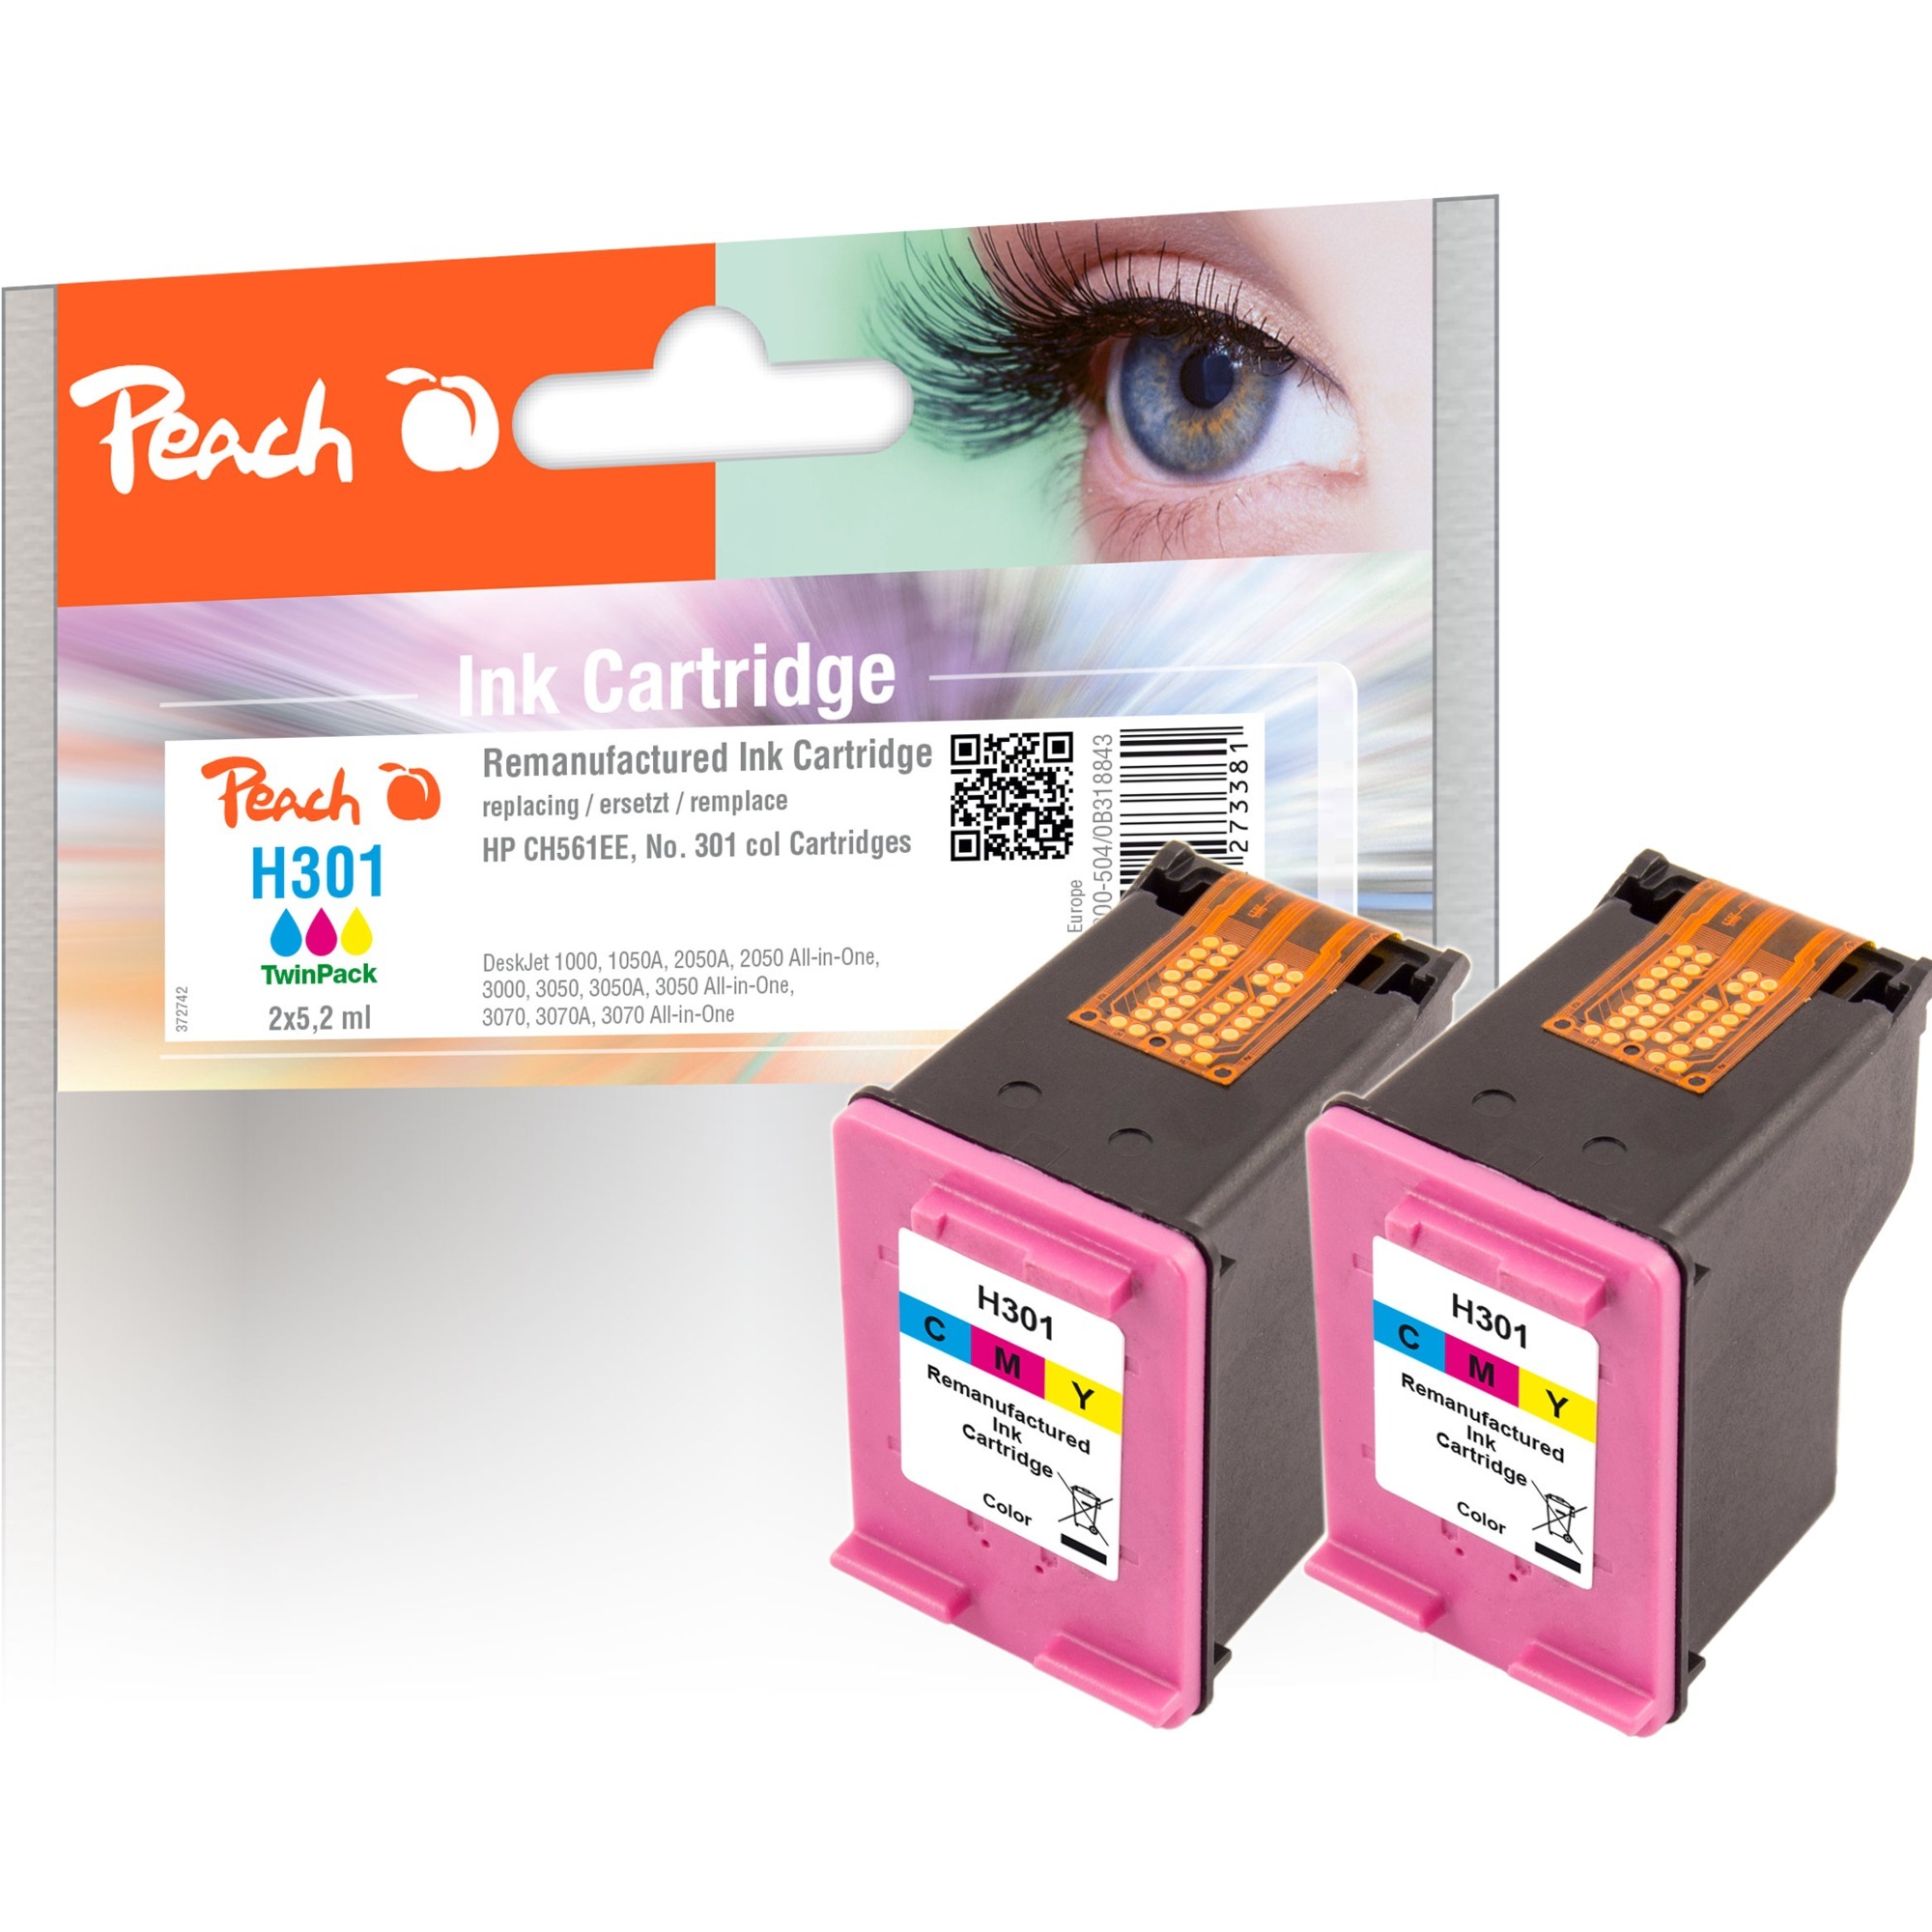 Image of Alternate - Tinte Doppelpack color PI300-504 online einkaufen bei Alternate